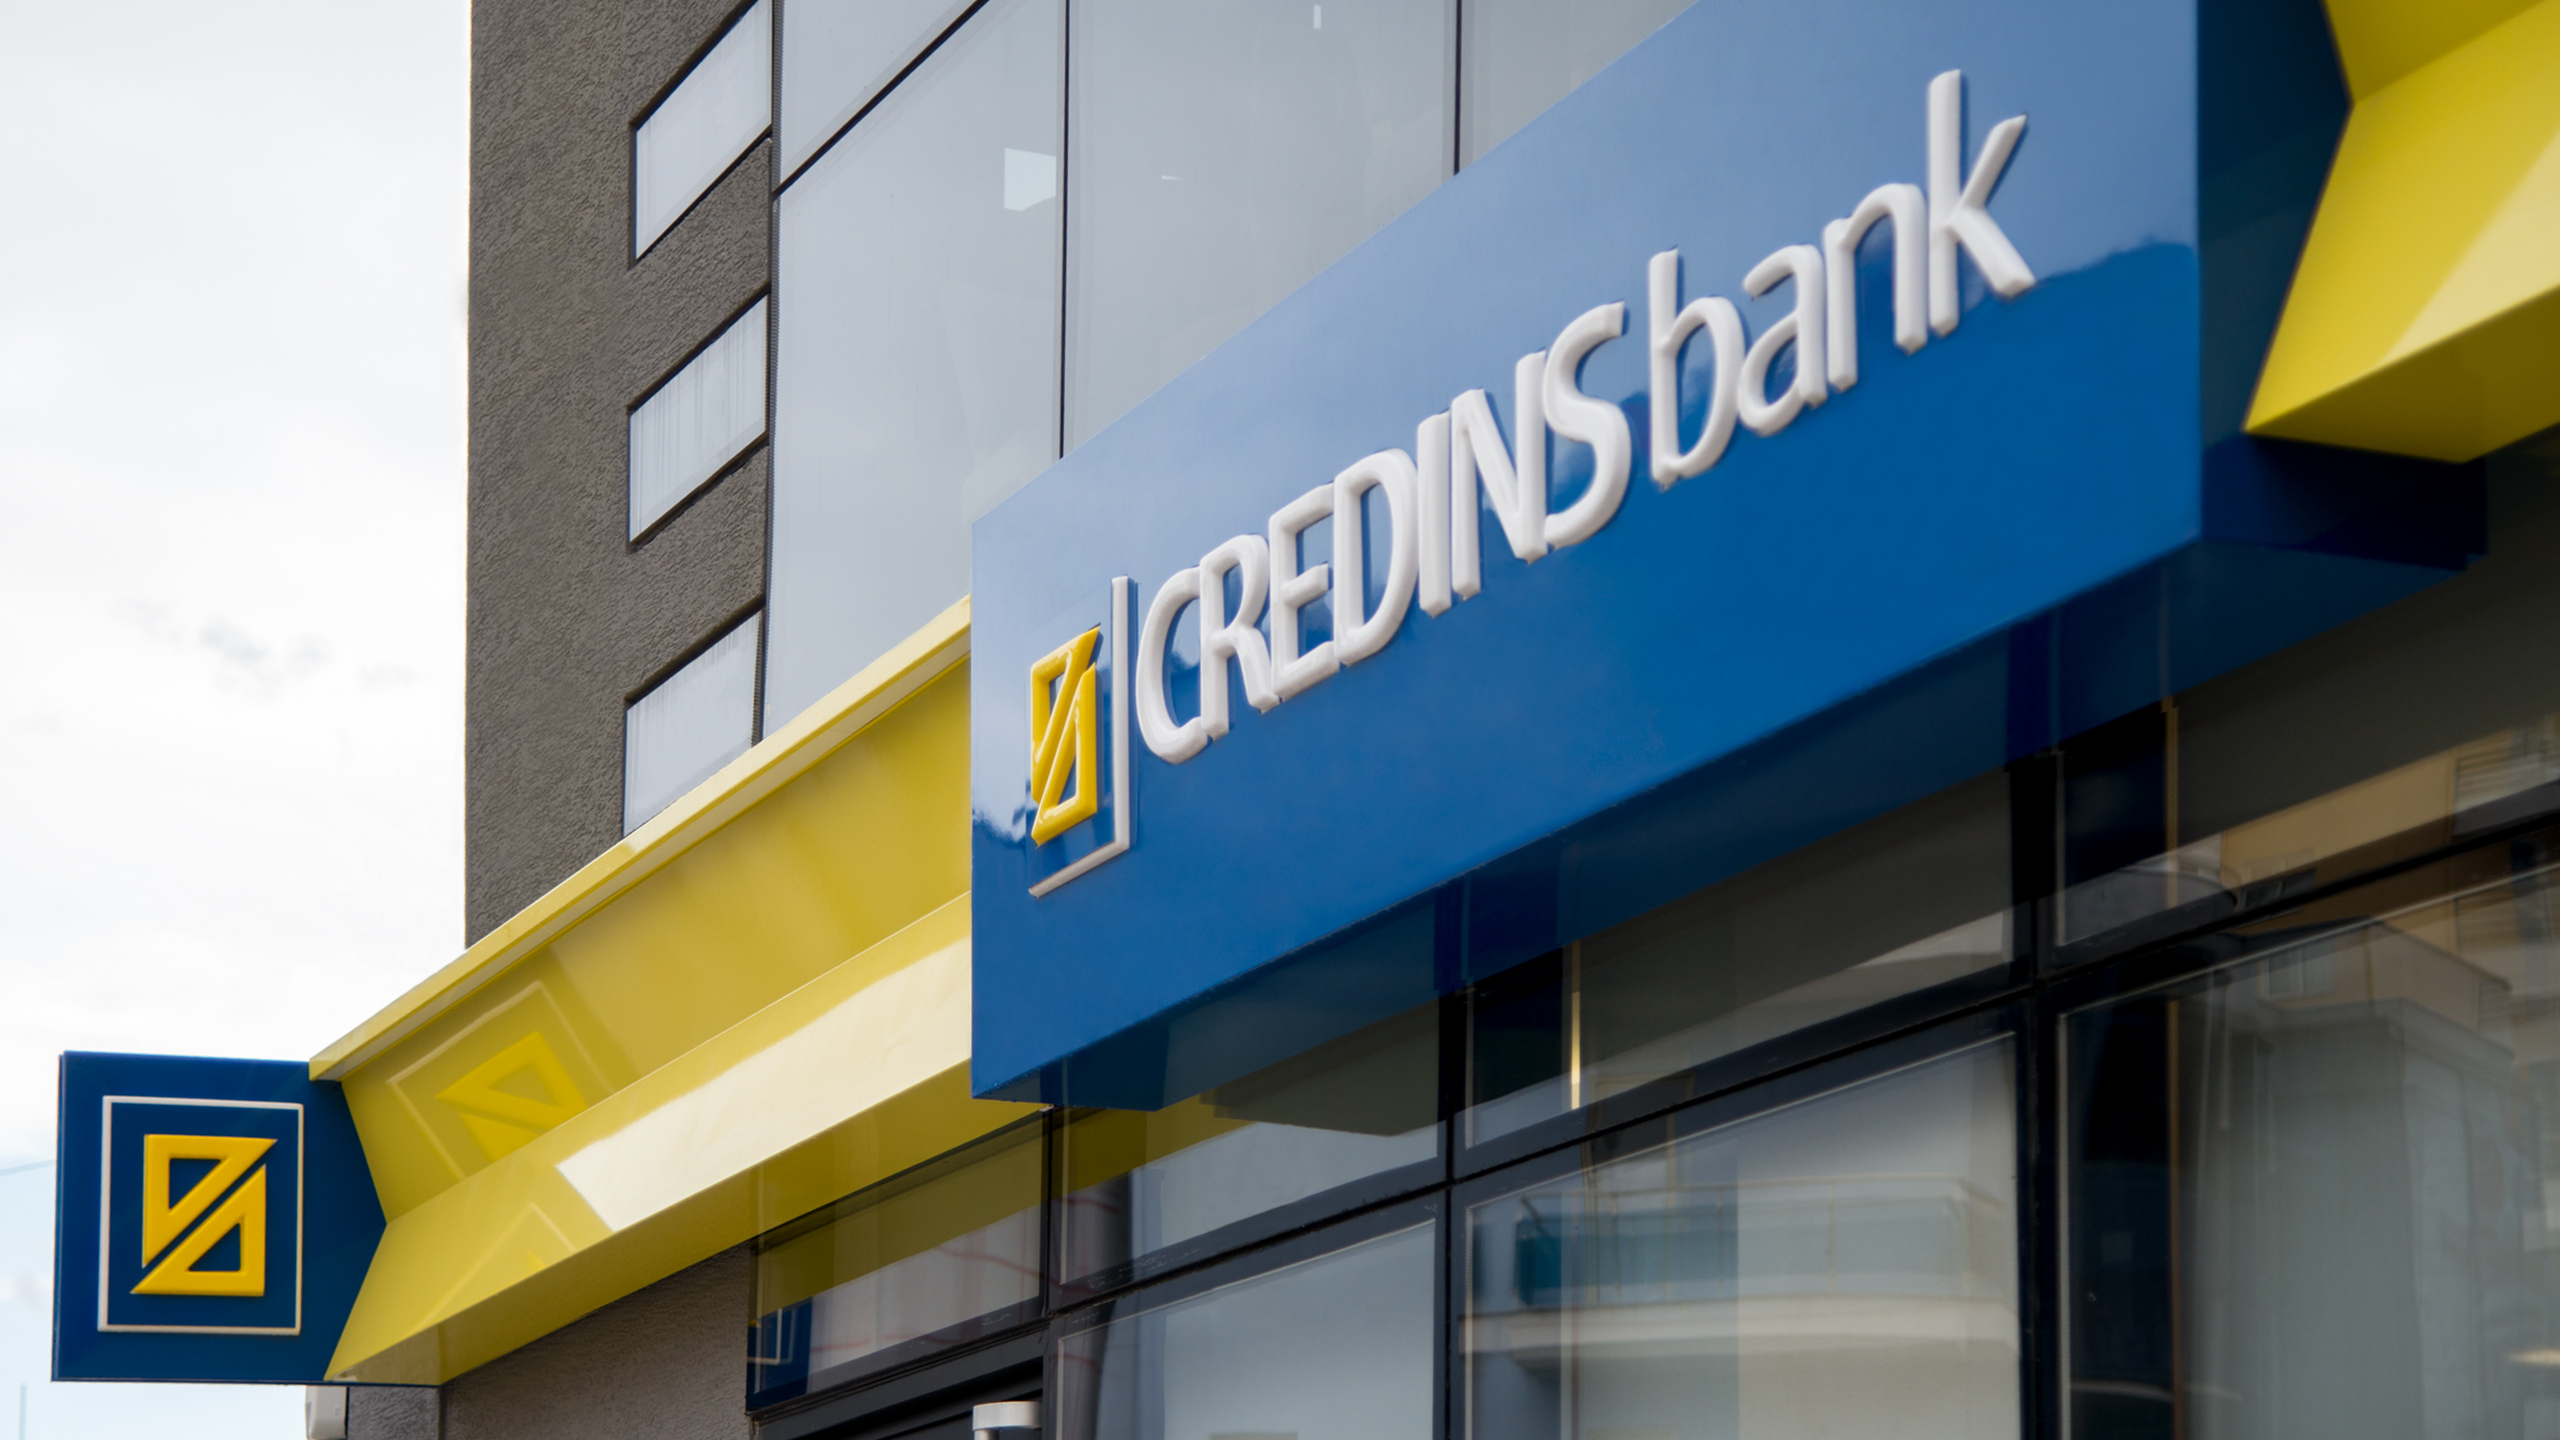 Credins Bank, Project Img 34 - Vatra Agency / Founder & CEO Gerton Bejo